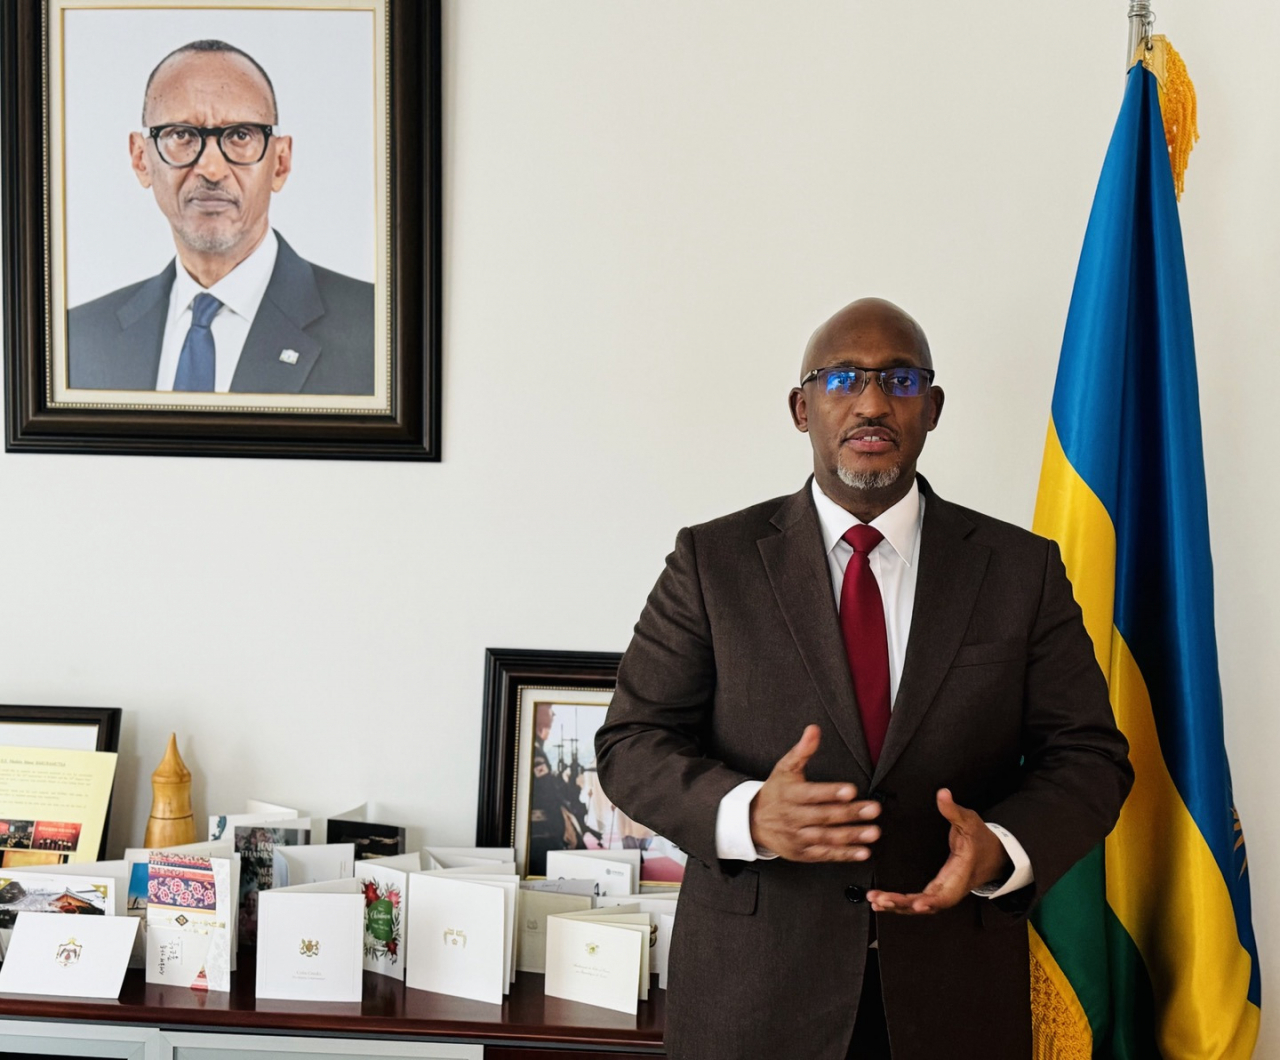 Rwandan Ambassador to Korea Bakuramutsa Nkubito Manzi speaks in an interview with The Korea Herald at Embassy of Rwanda in Yongsan-gu, Seoul. (Sanjay Kumar/The Korea Herald)